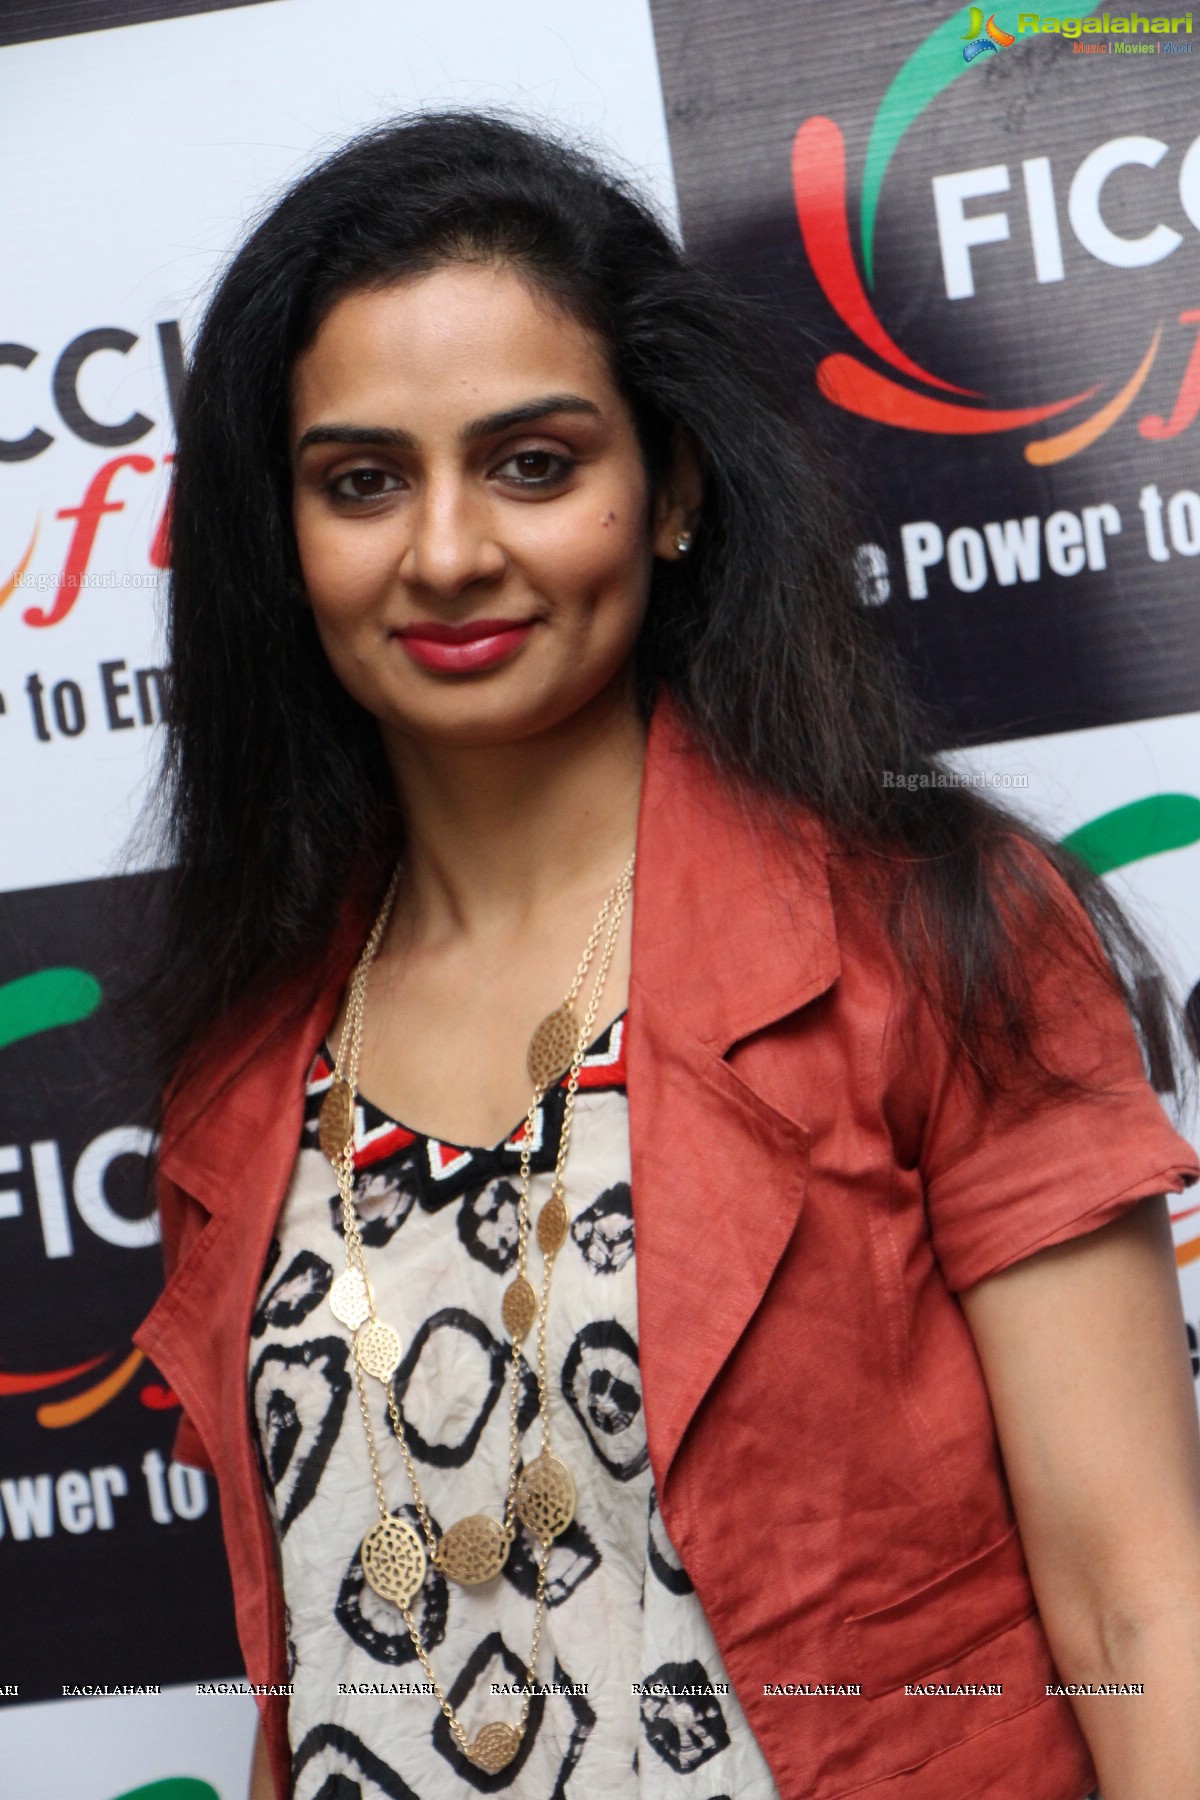 FICCI Ladies Organisation Interactive Session with Actress Vidya Balan